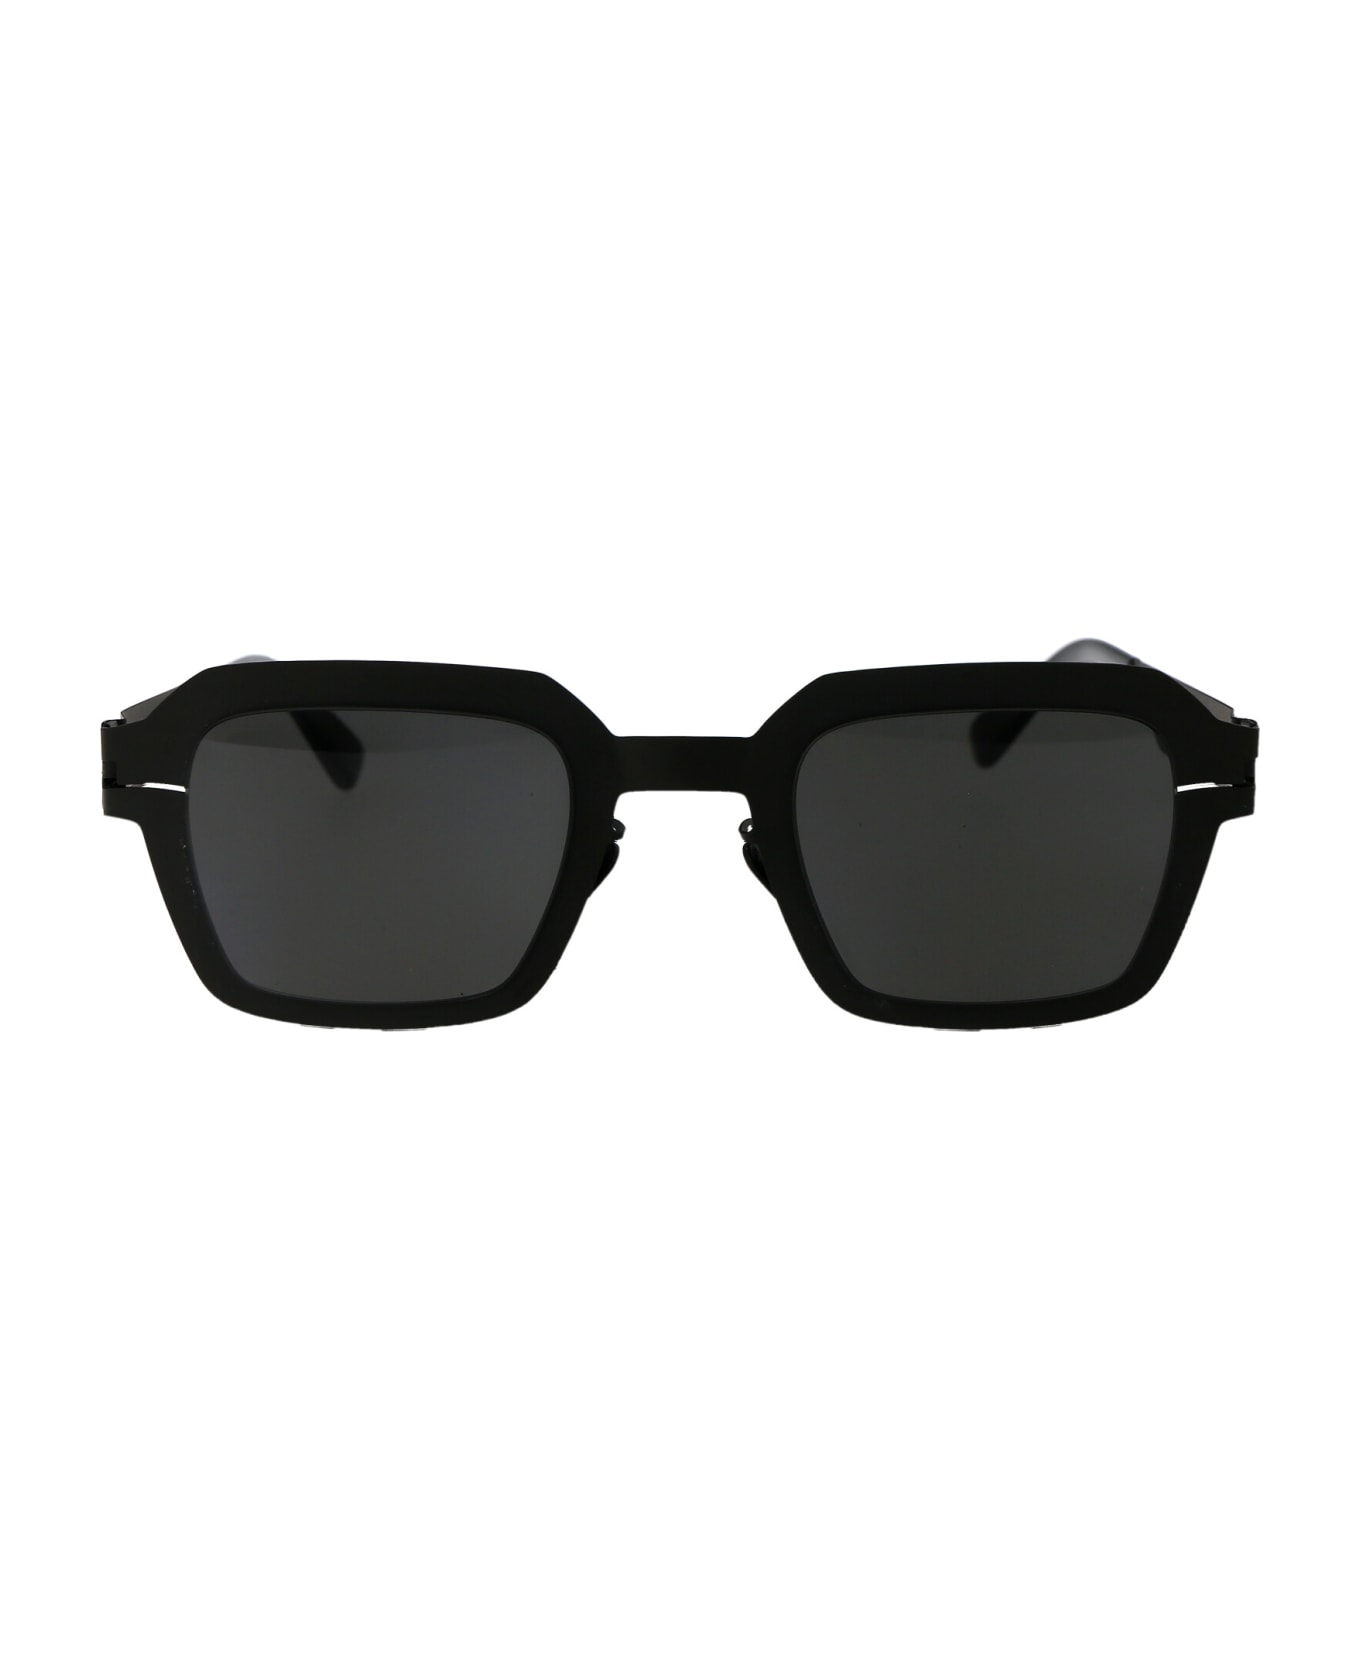 Mykita Mott Sunglasses - 002 Black Dark Grey Solid